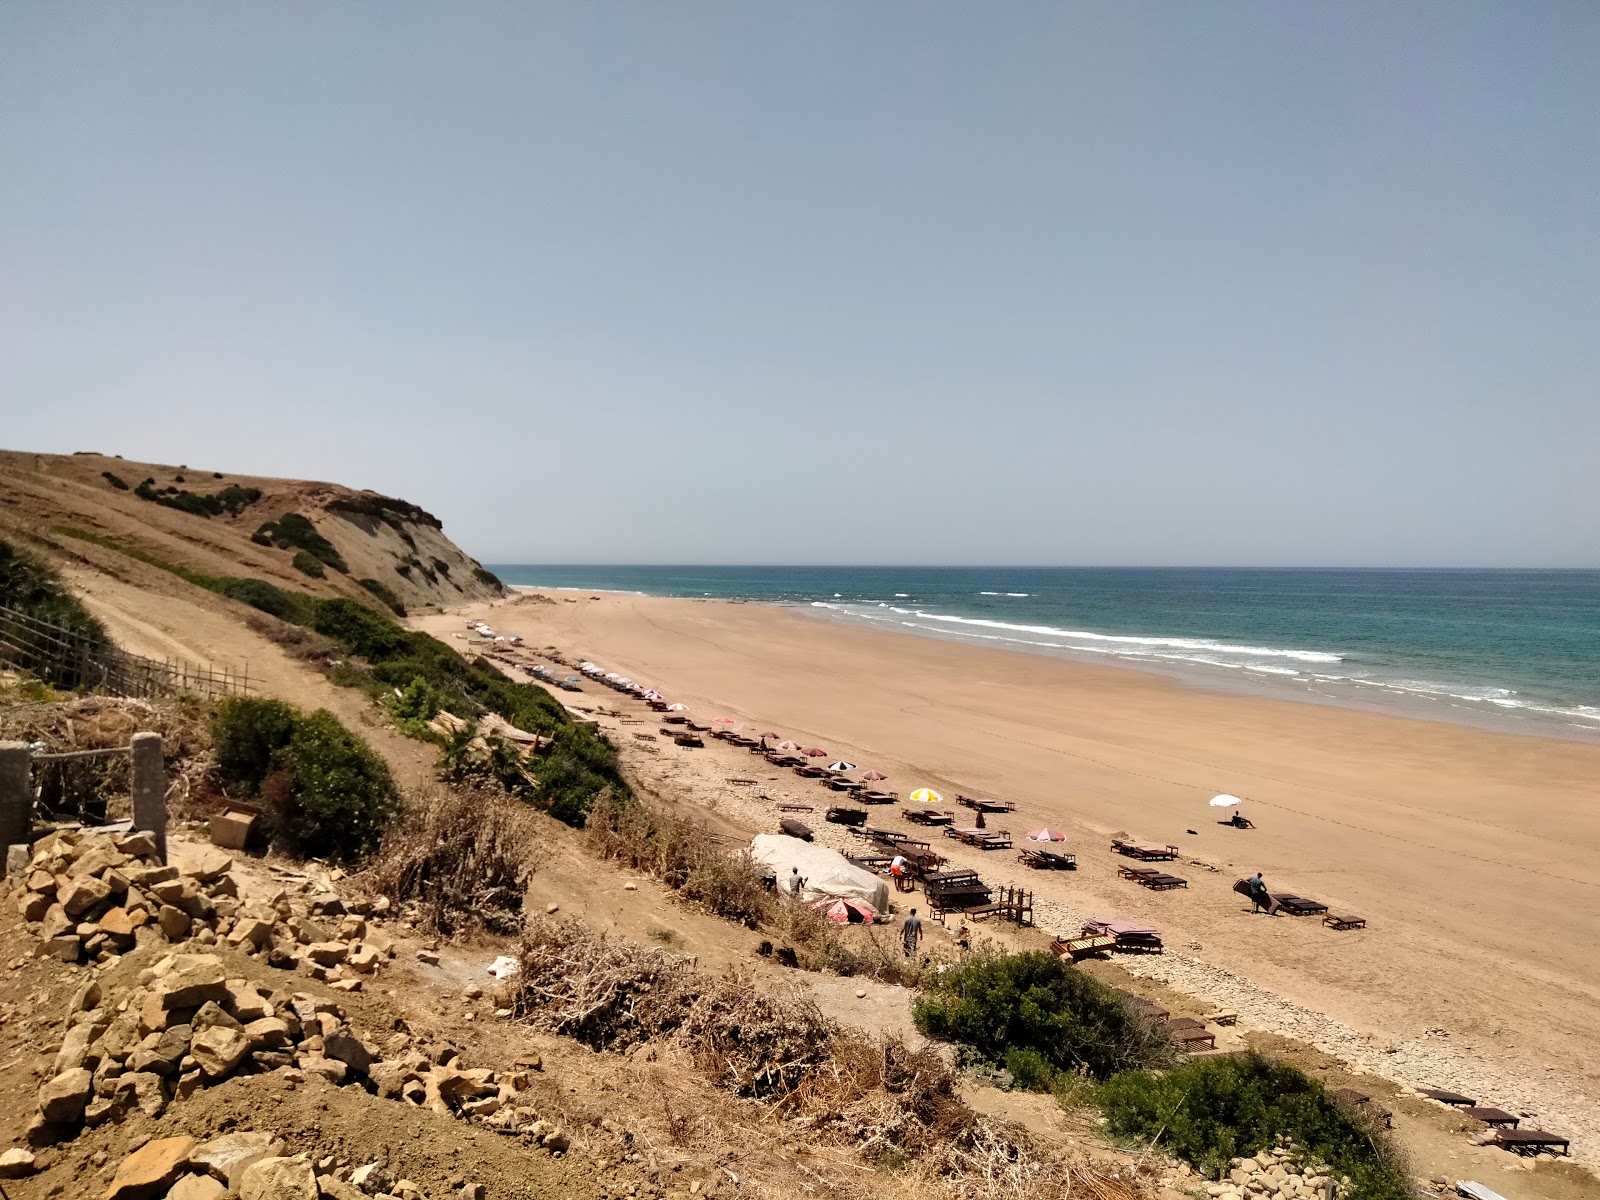 Foto de Plage Sidi Mghayet con brillante arena fina superficie